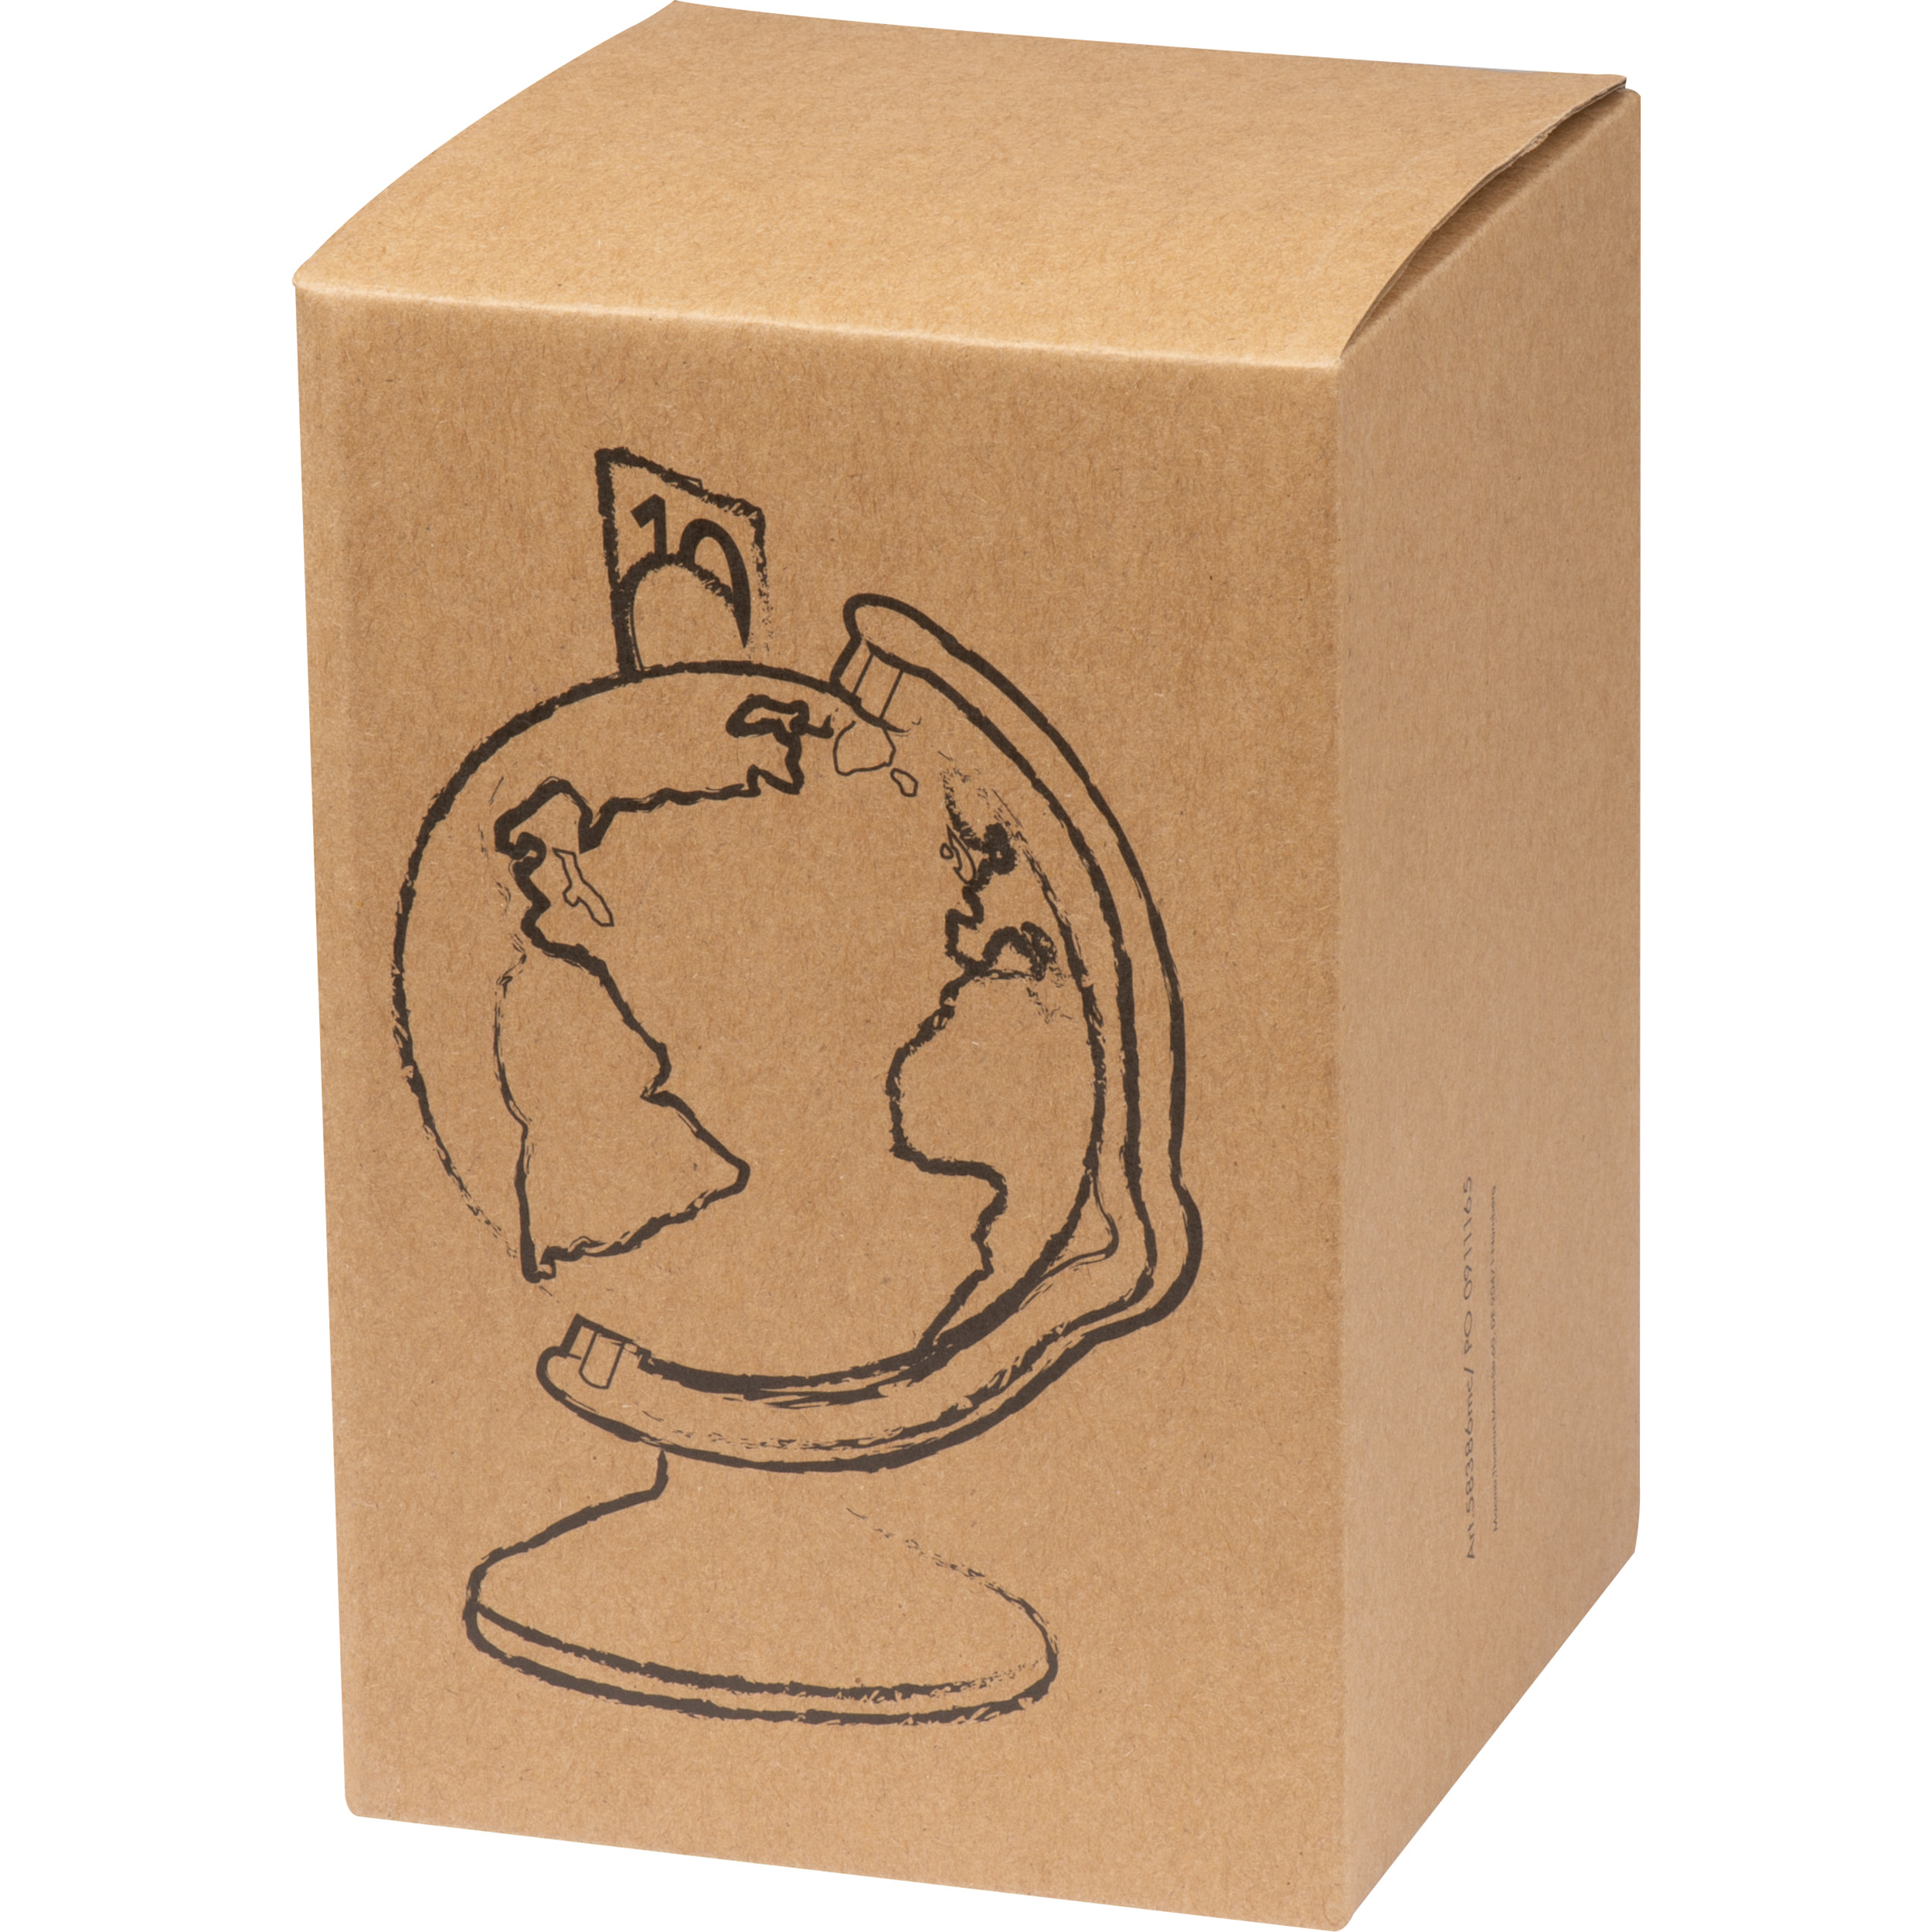 Savings box in globe shape